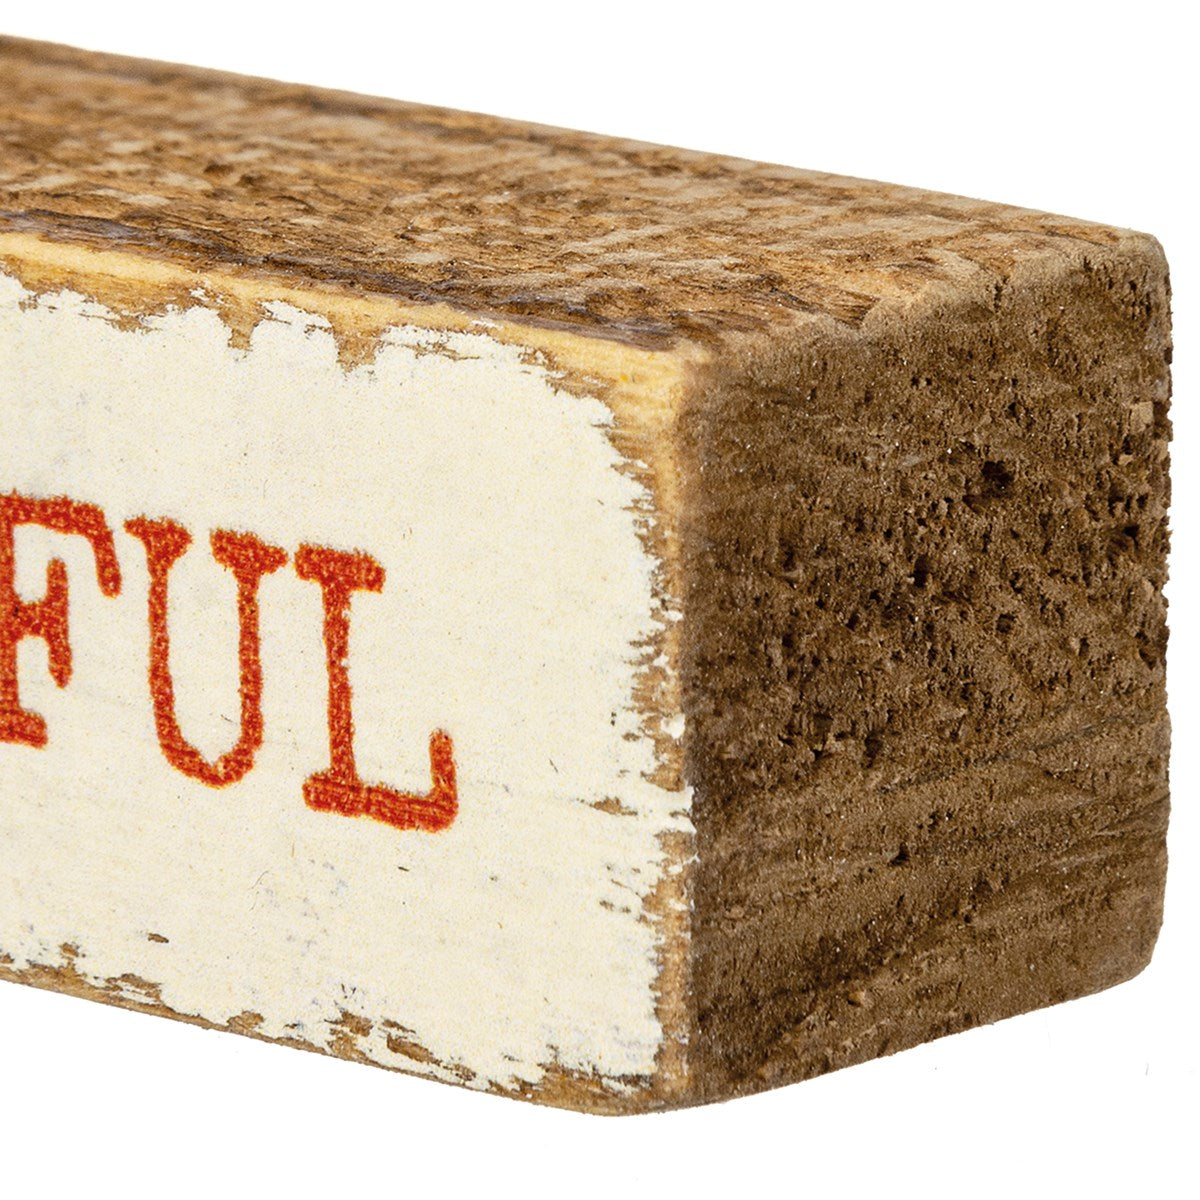 💙 Be Thankful Mini 3.5" Wooden Block Sign